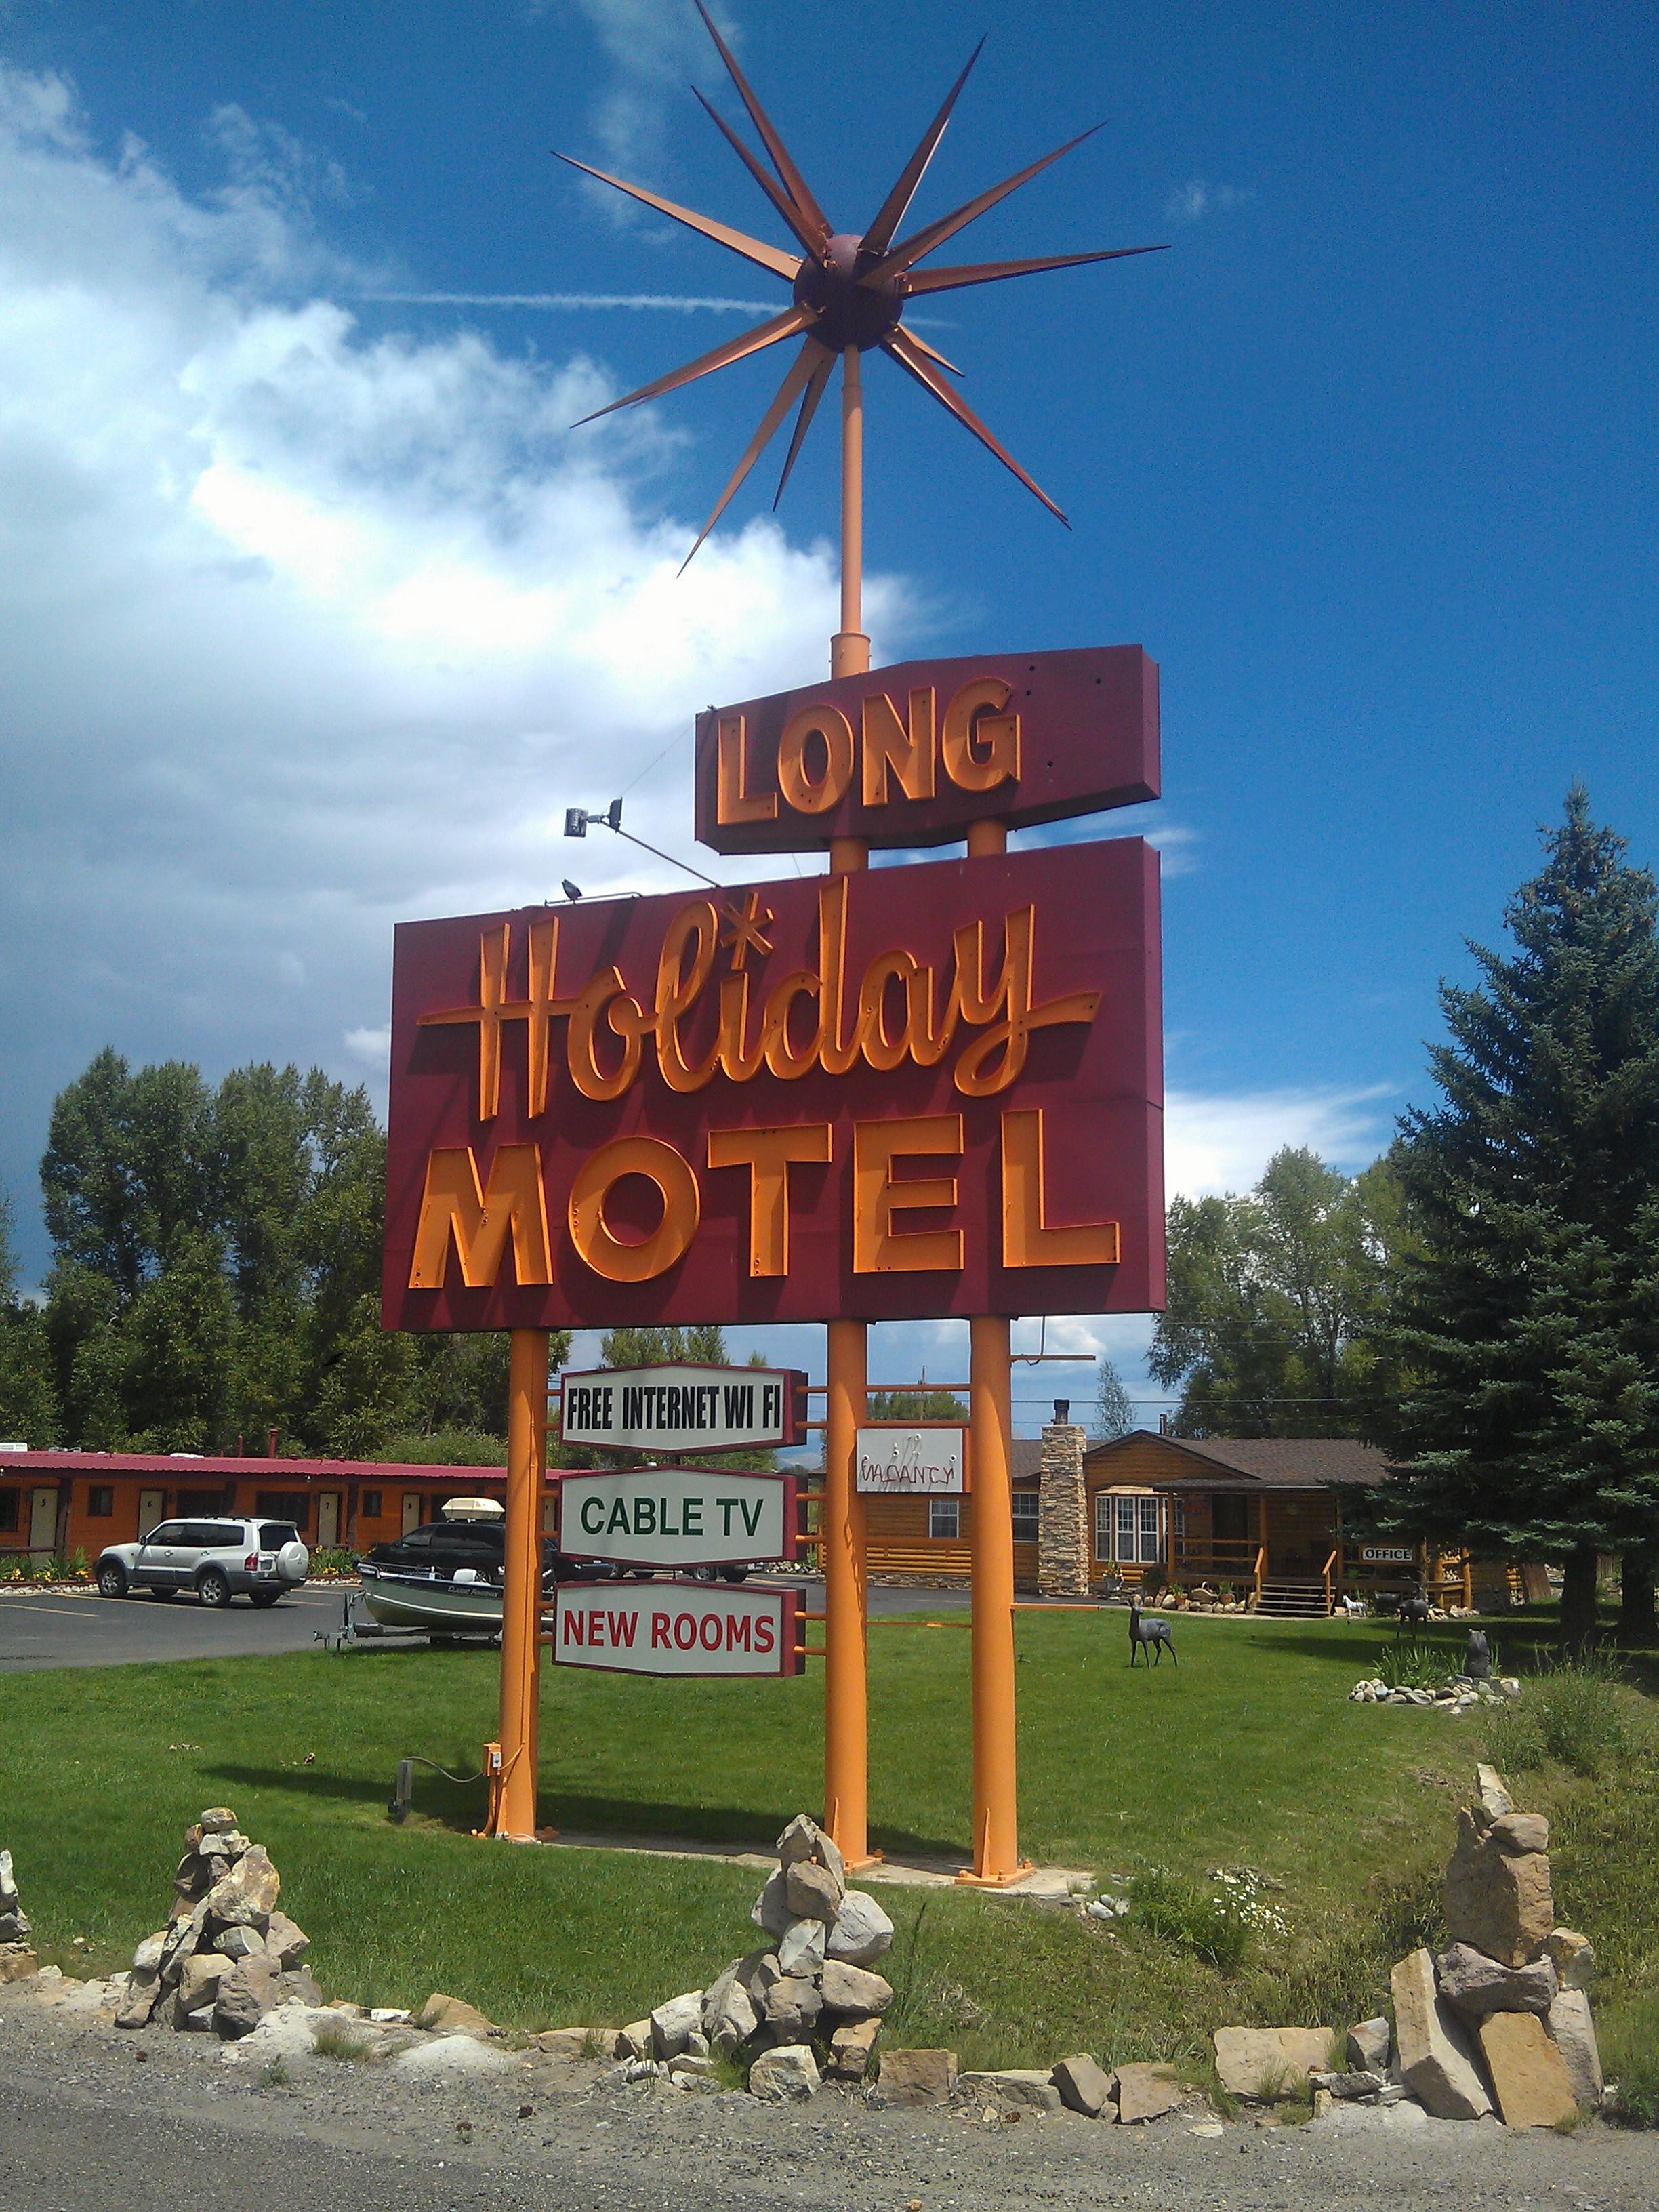 Long Holiday Motel - 1198 West U.S. Highway 50, Gunnison, Colorado U.S.A. - August 3, 2013